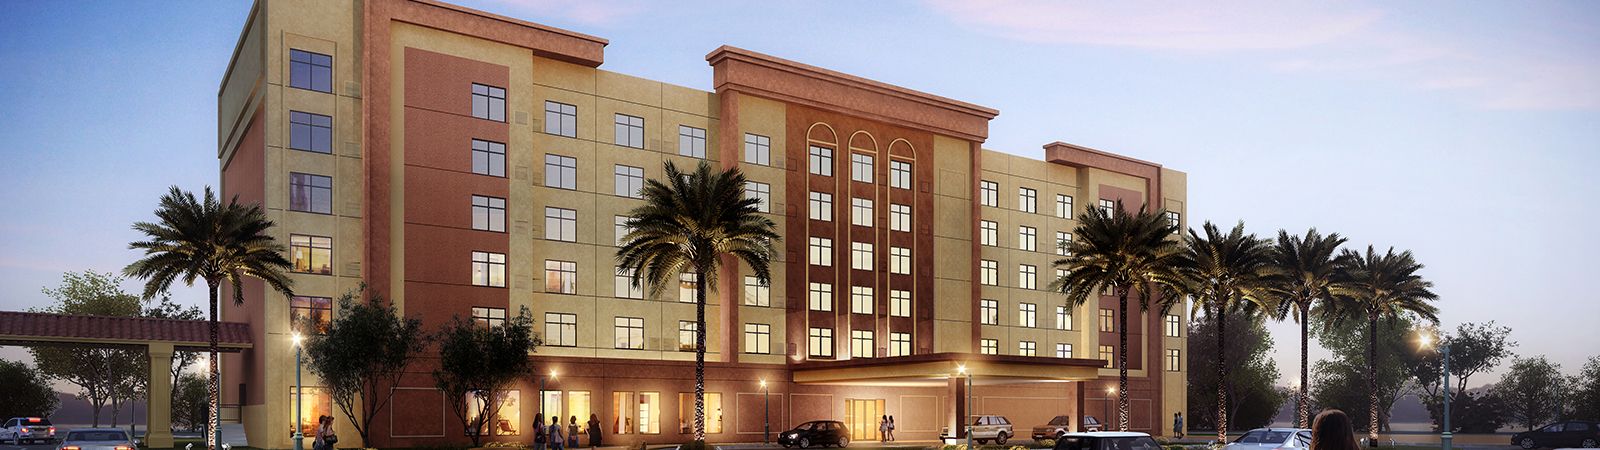 Casino Del Sol Hotel Expansion 2018 rendering